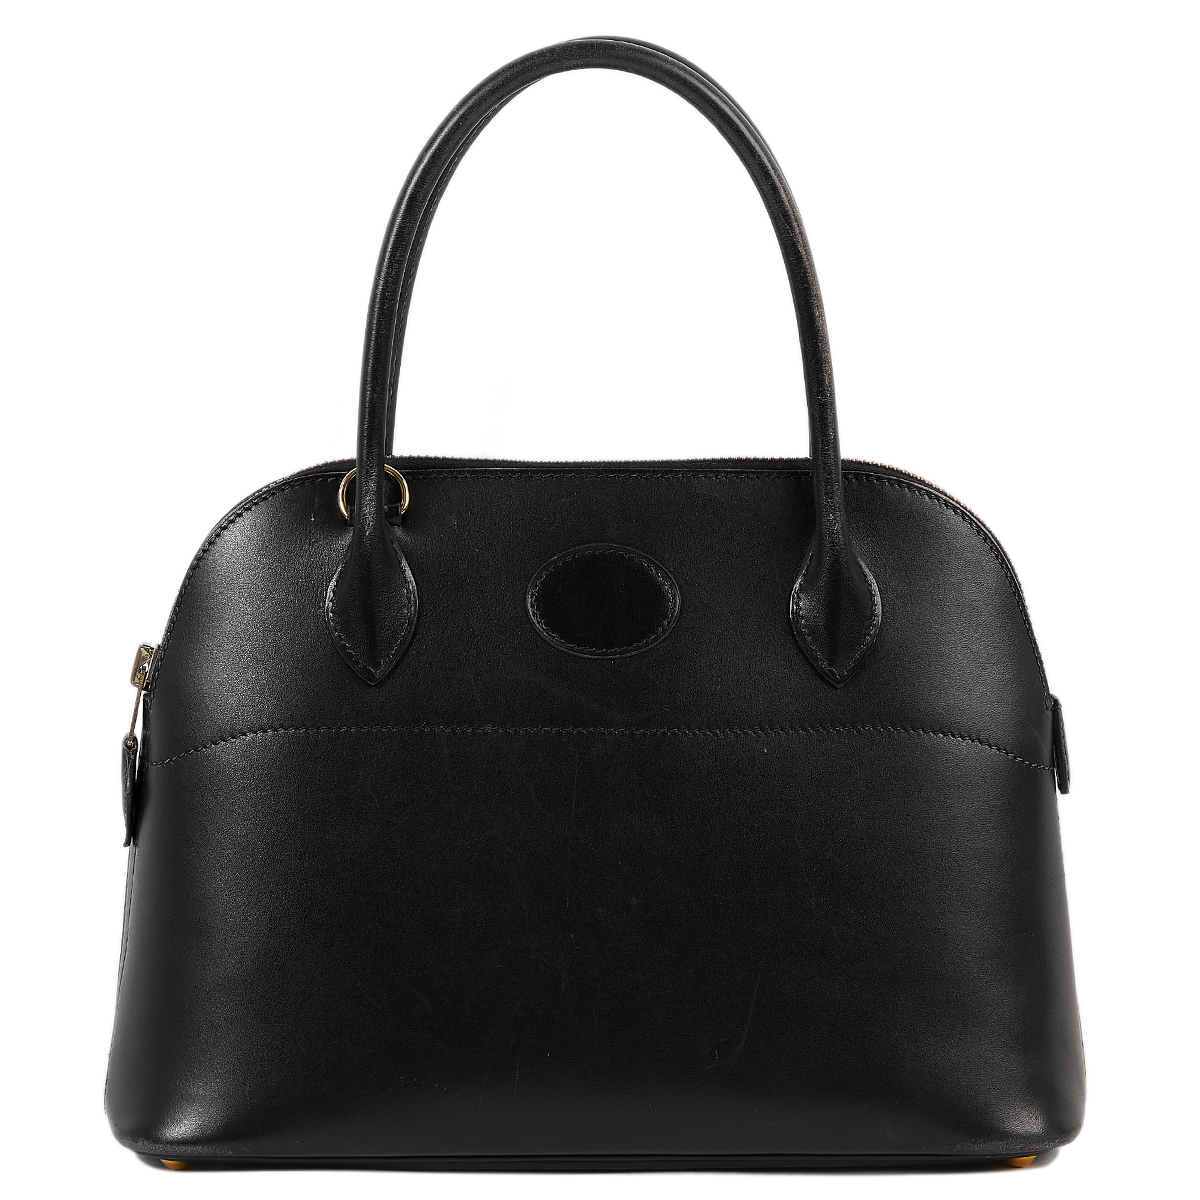 HERMÈS Bolide 27 handbag in Black Chamonix leather with Gold